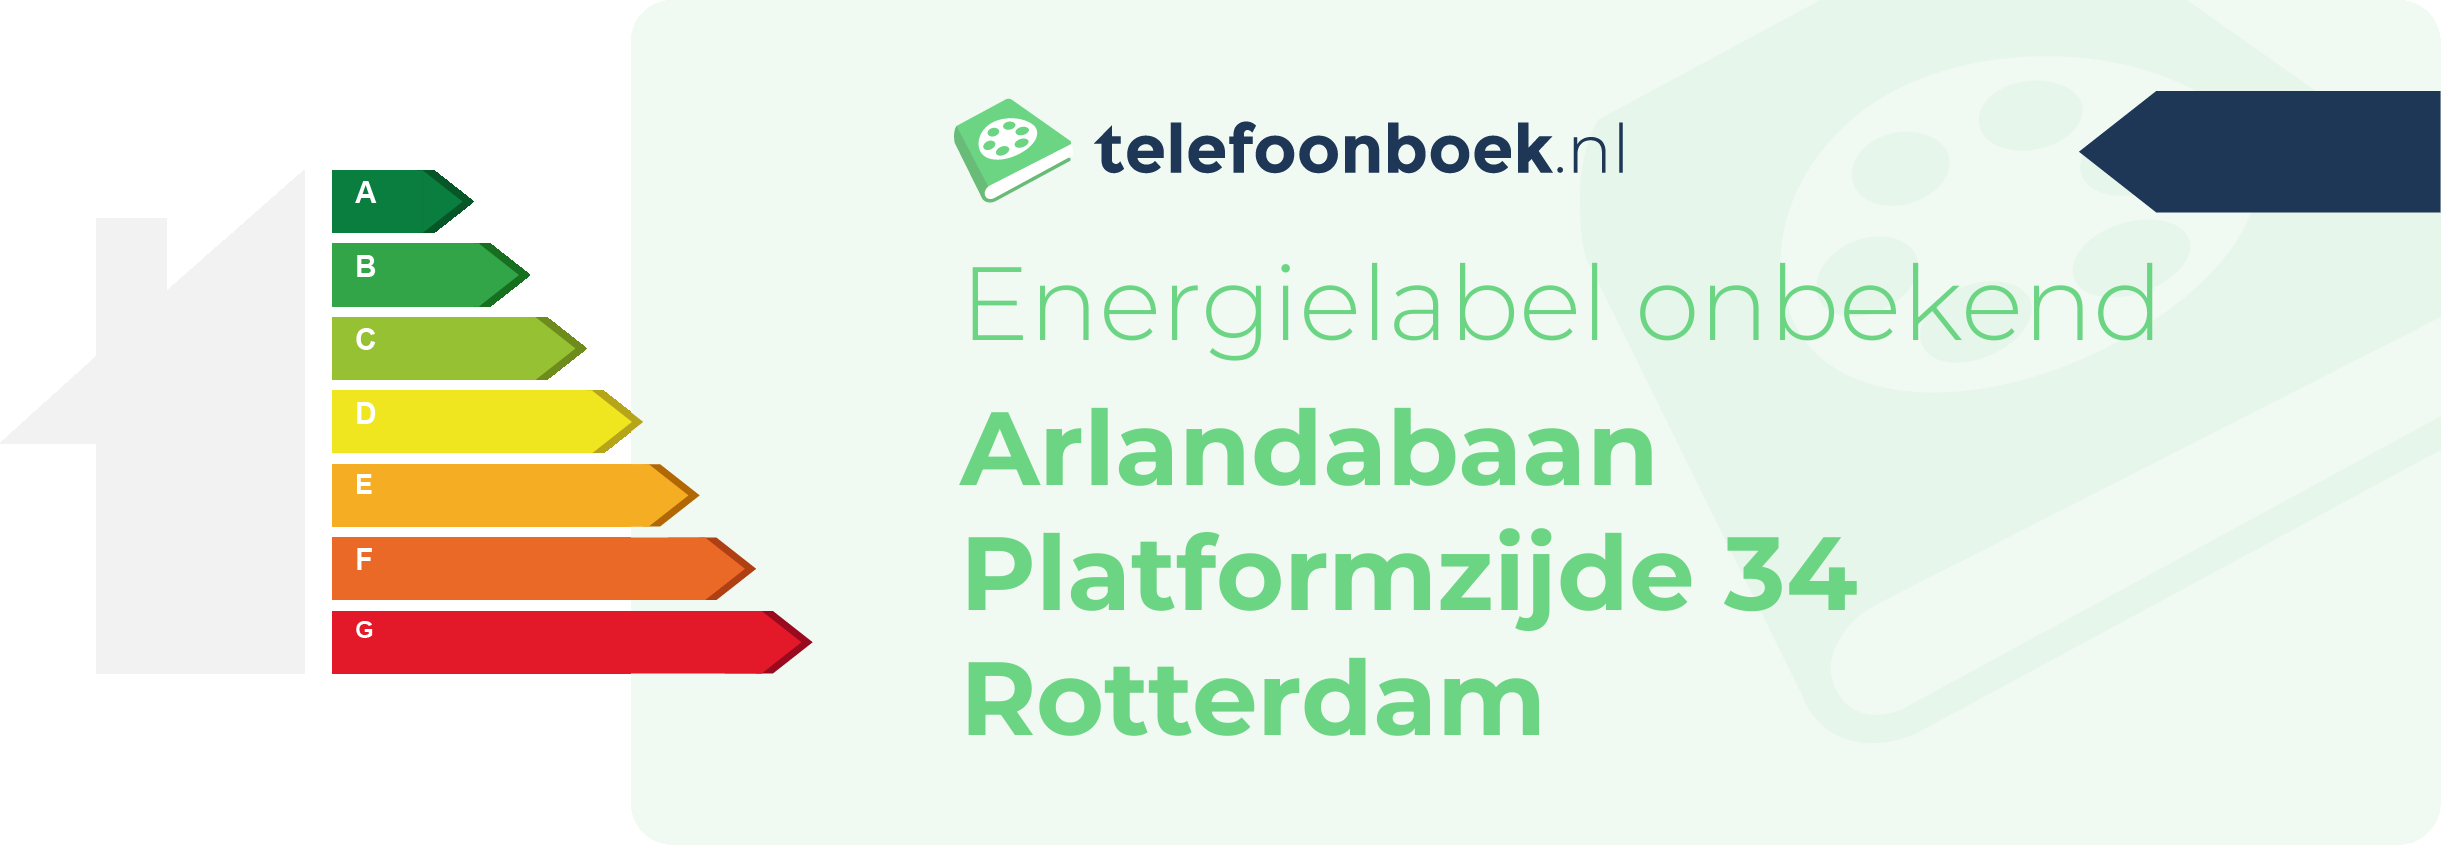 Energielabel Arlandabaan Platformzijde 34 Rotterdam